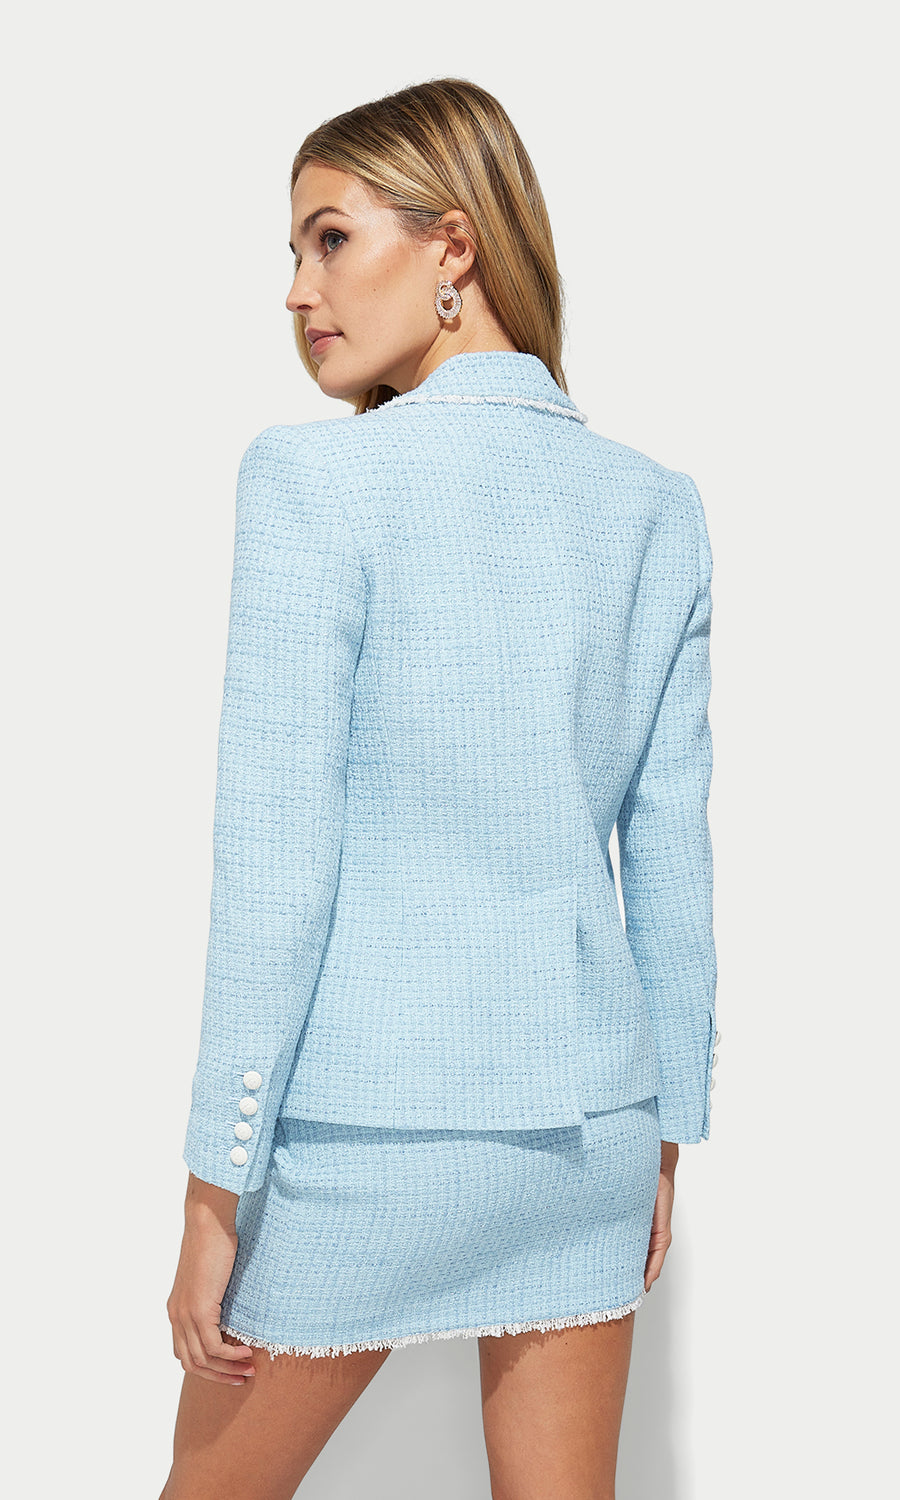 Gia Contrast Tweed Blazer - French Blue/Cream